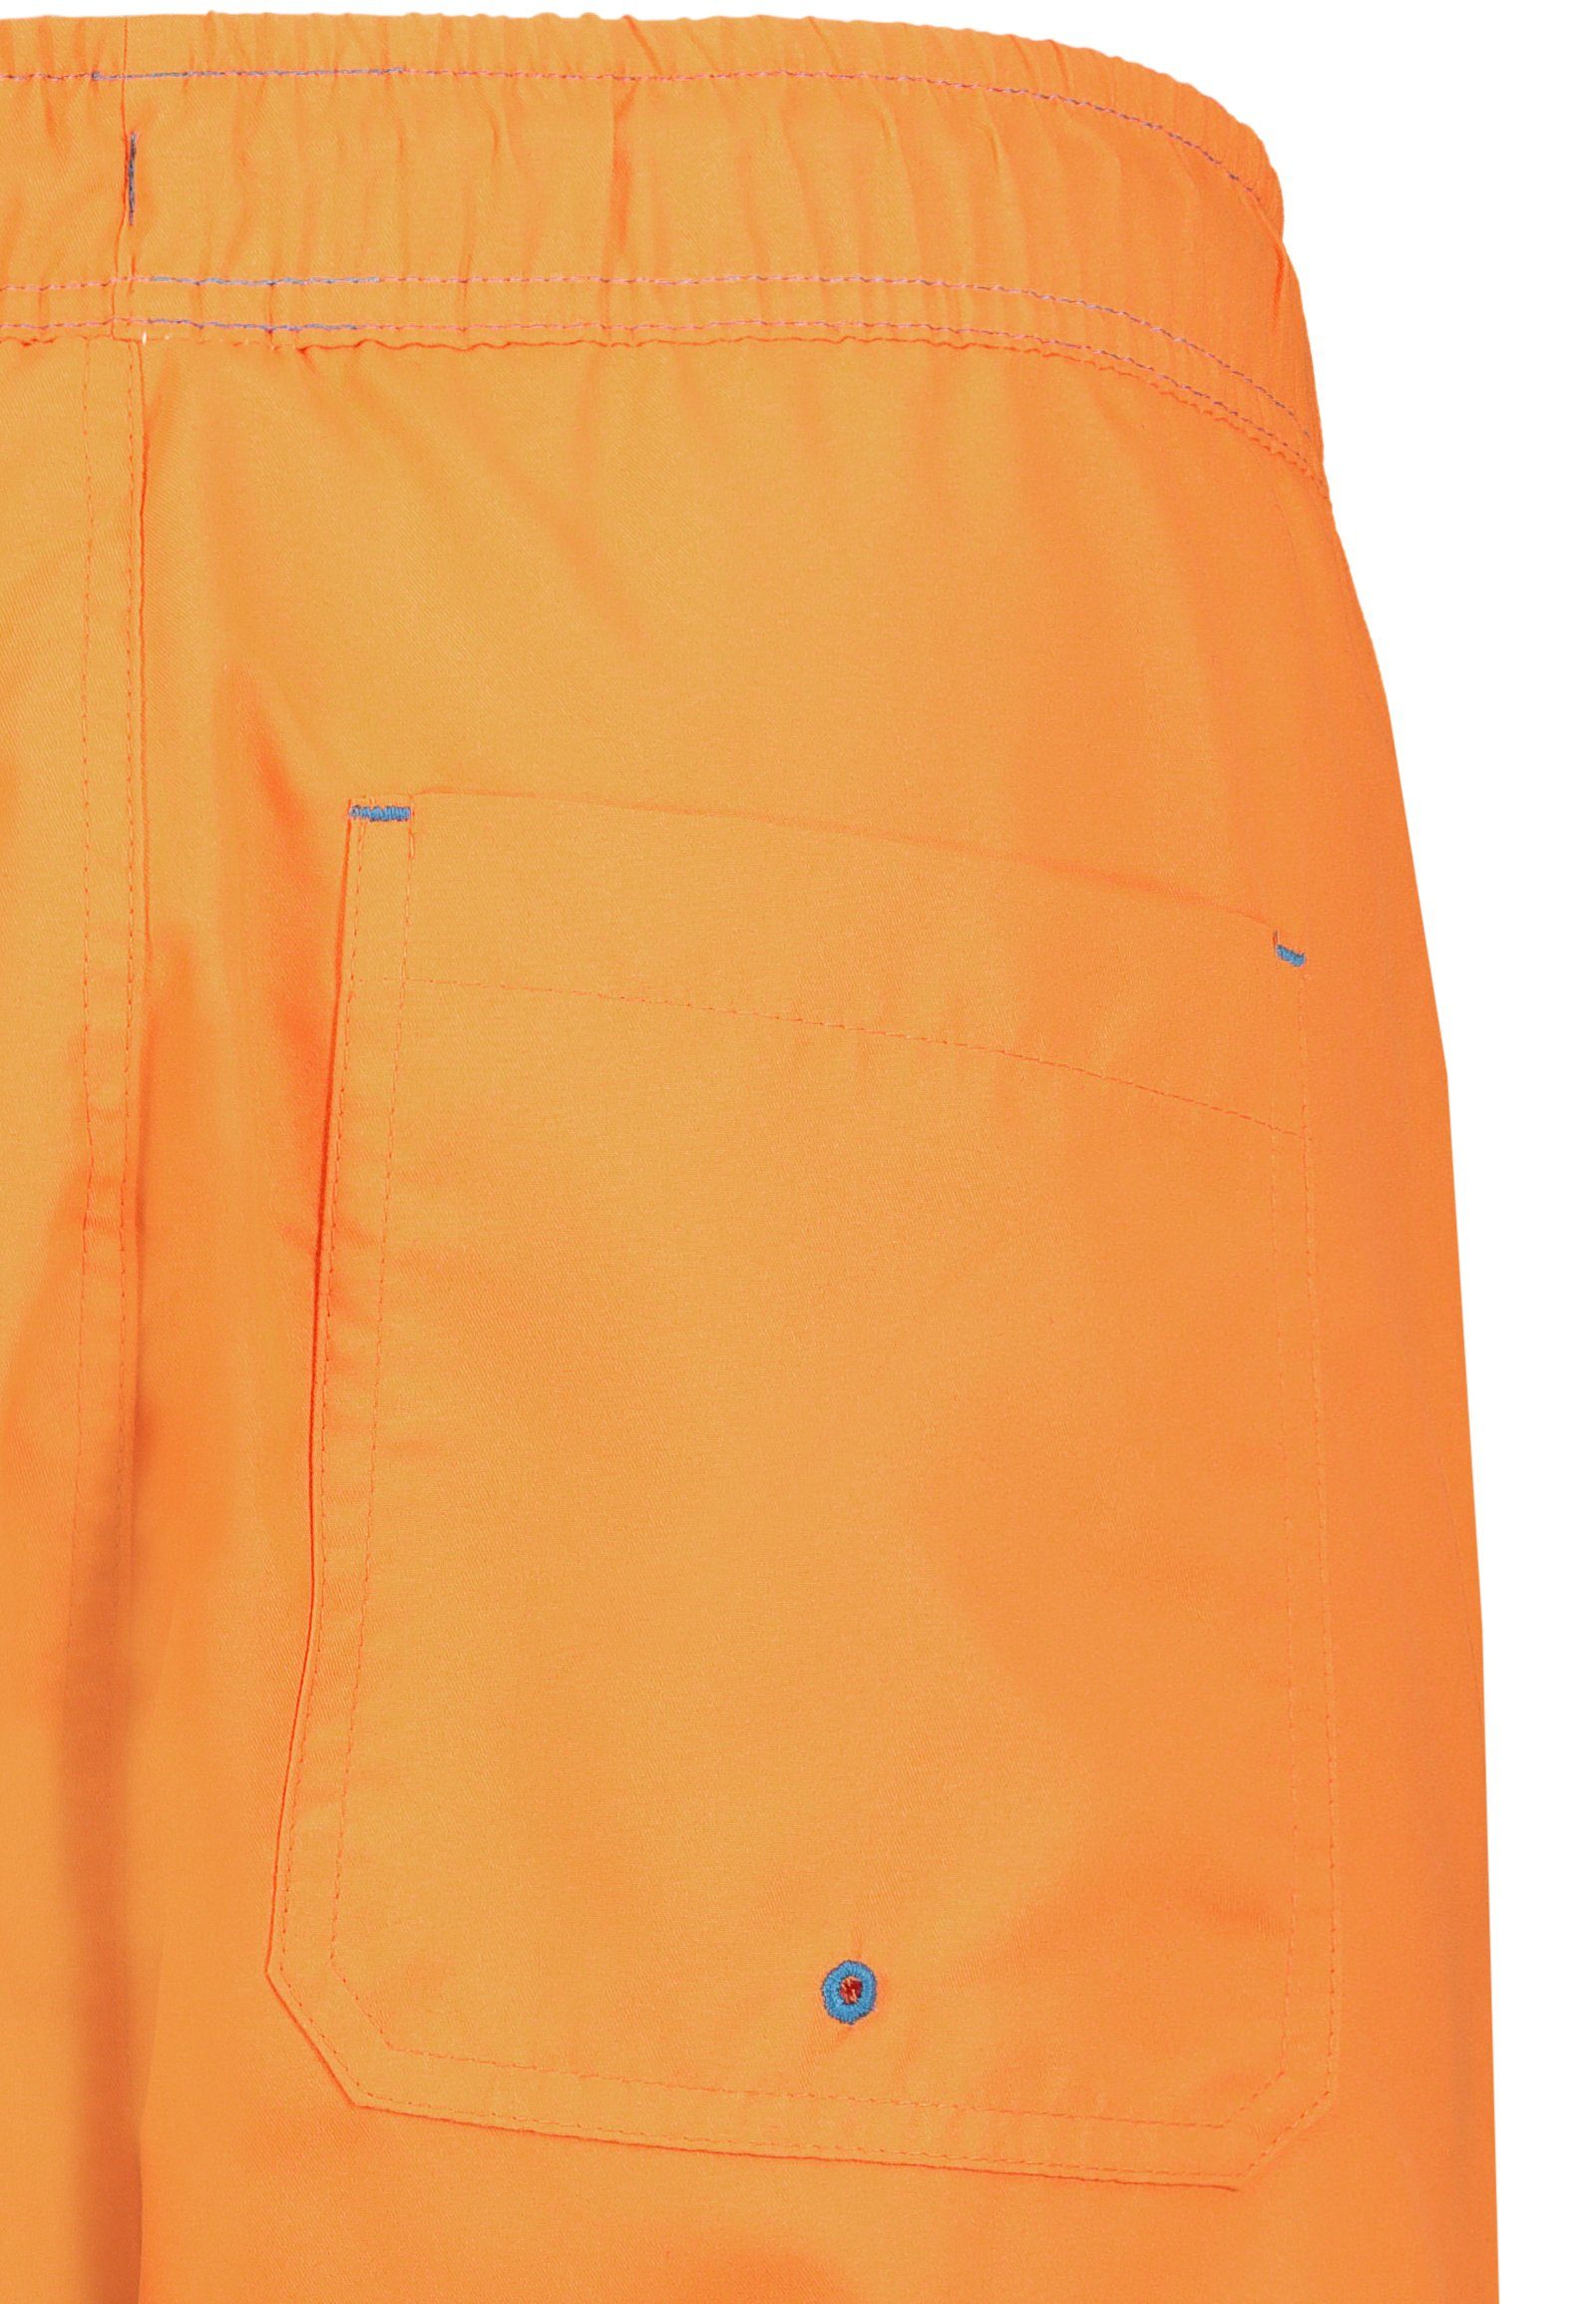 Stitch & mit Badehose Soul Print Badeshorts orange